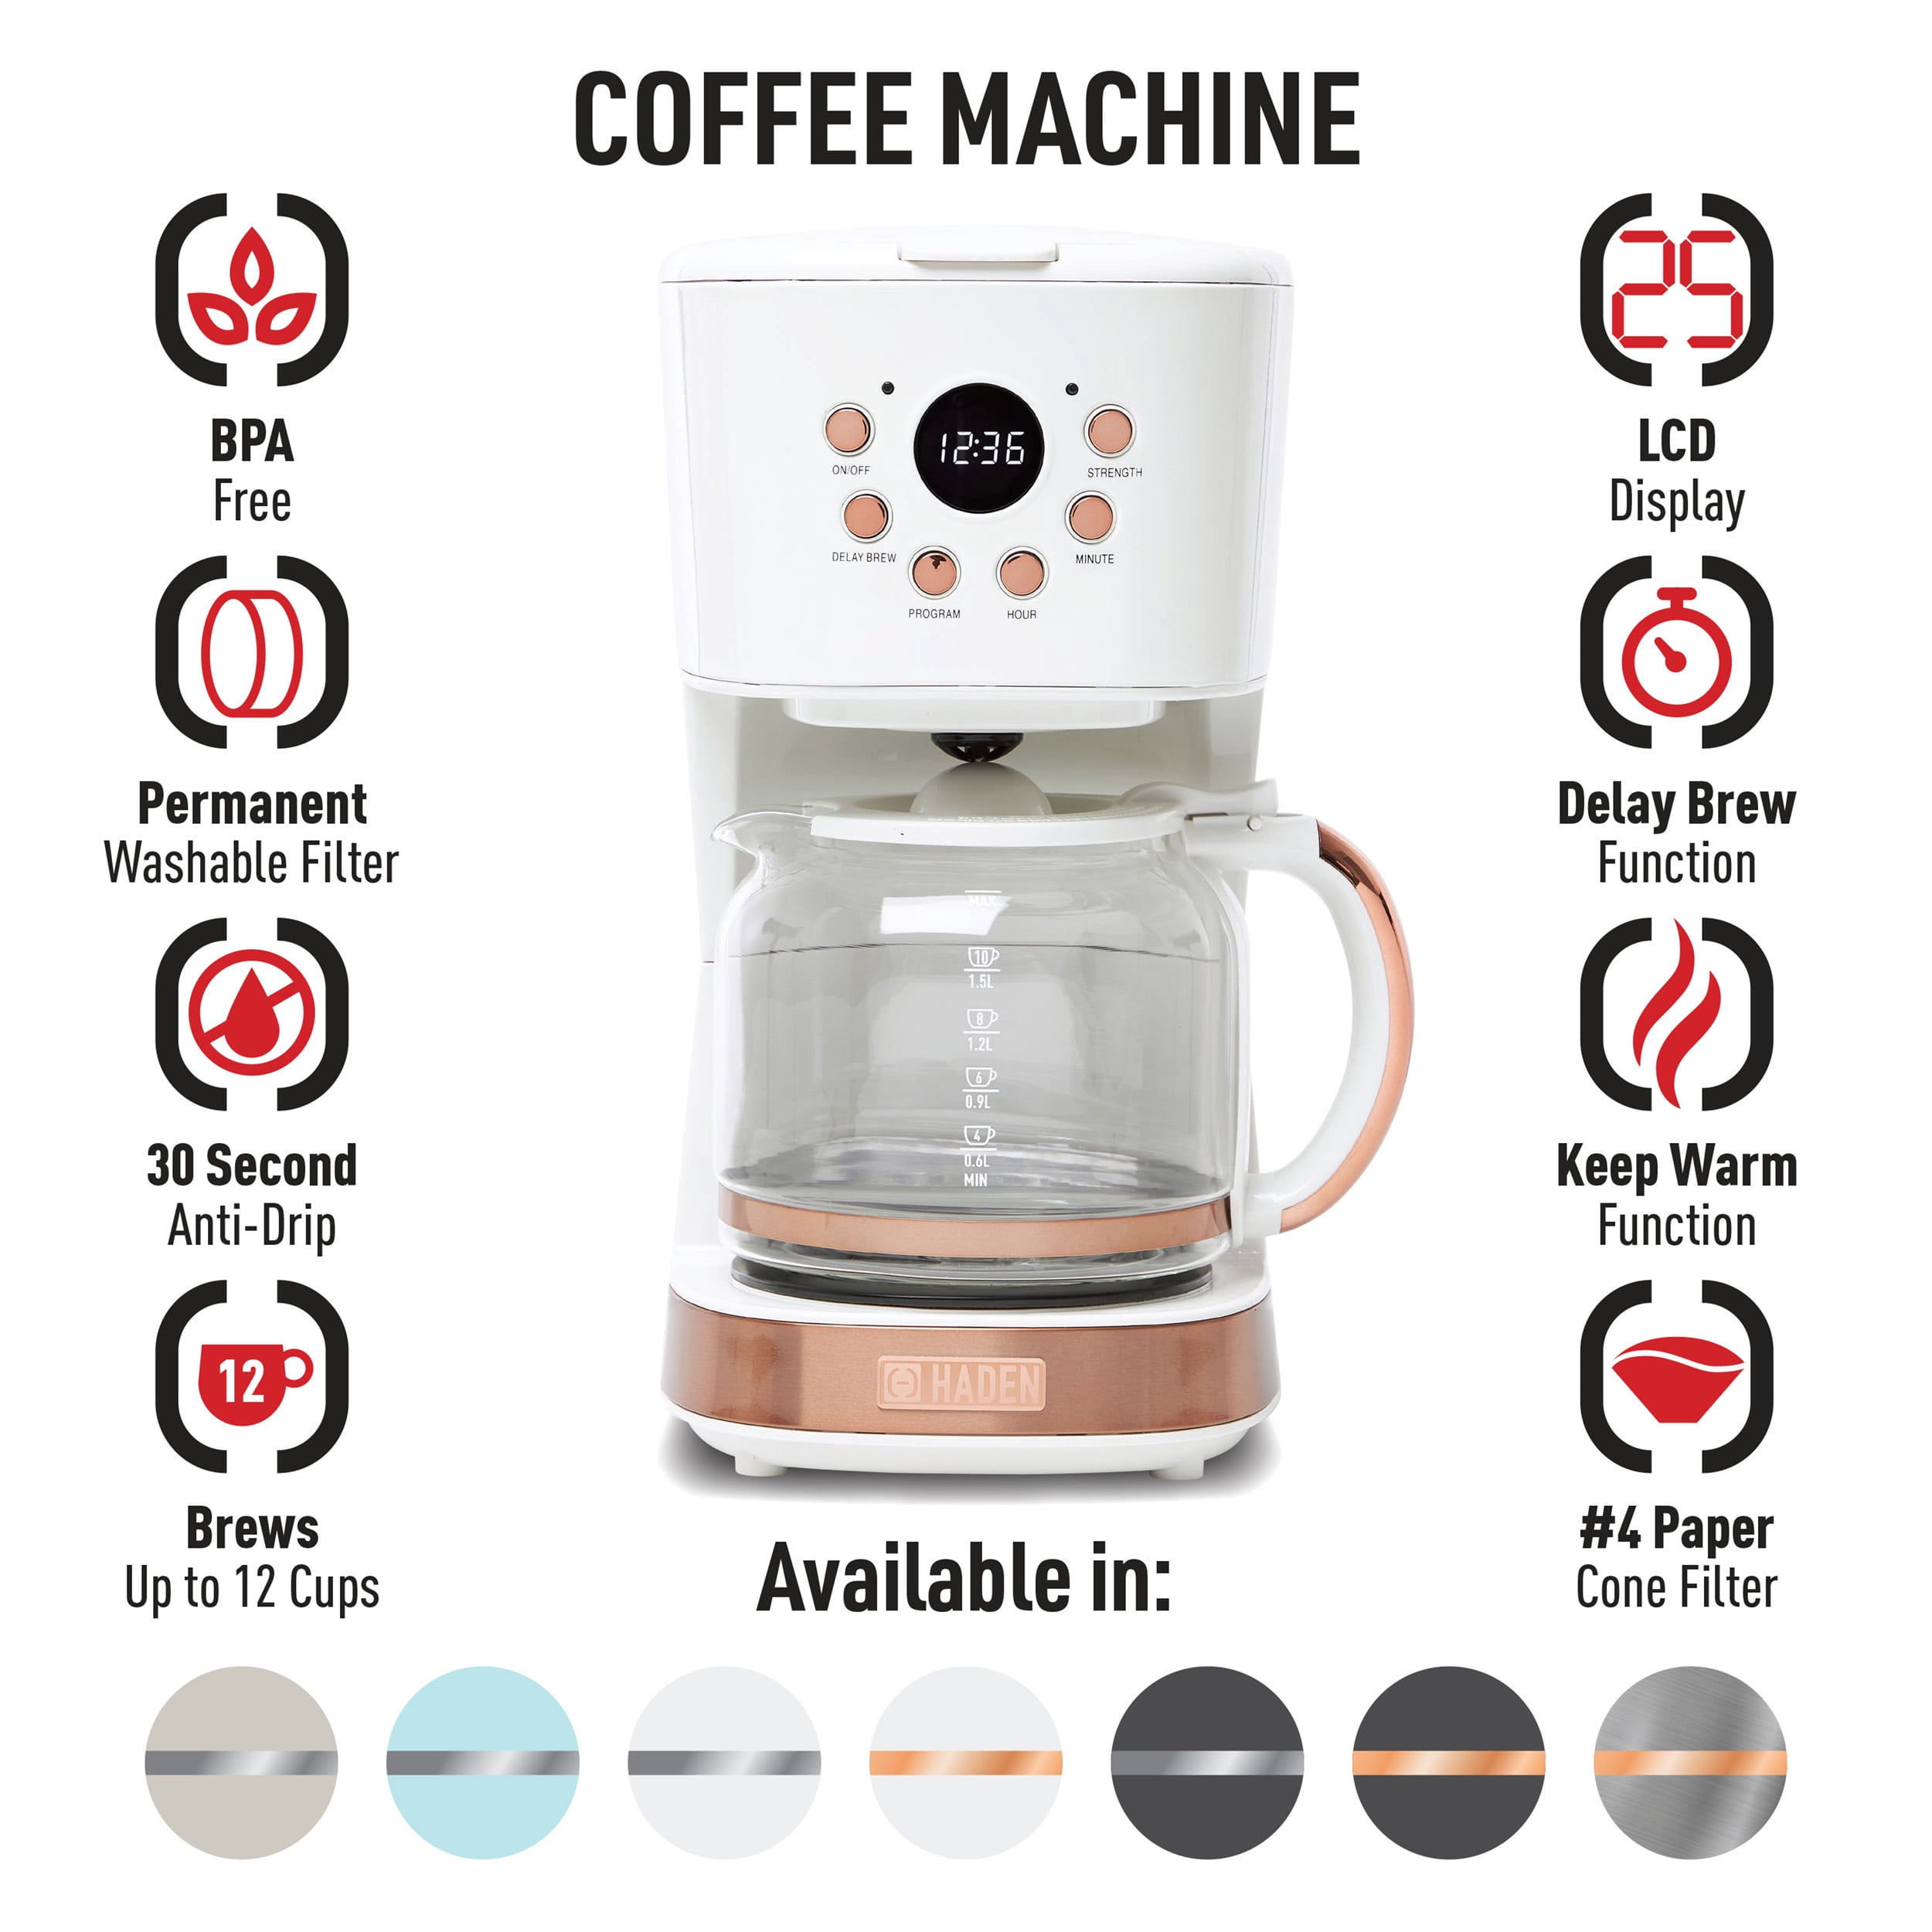 Haden 12-Cup Programmable Coffee Maker